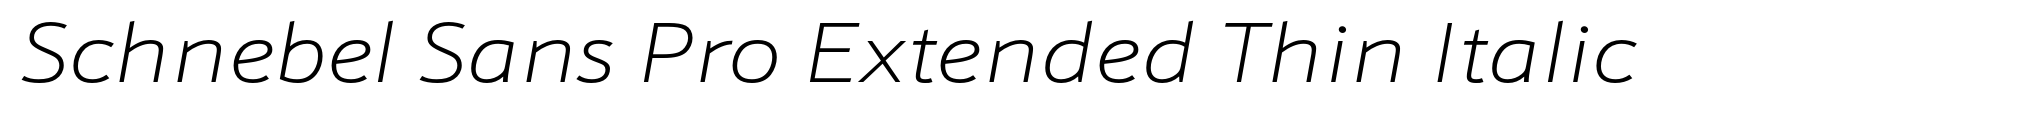 Schnebel Sans Pro Extended Thin Italic image